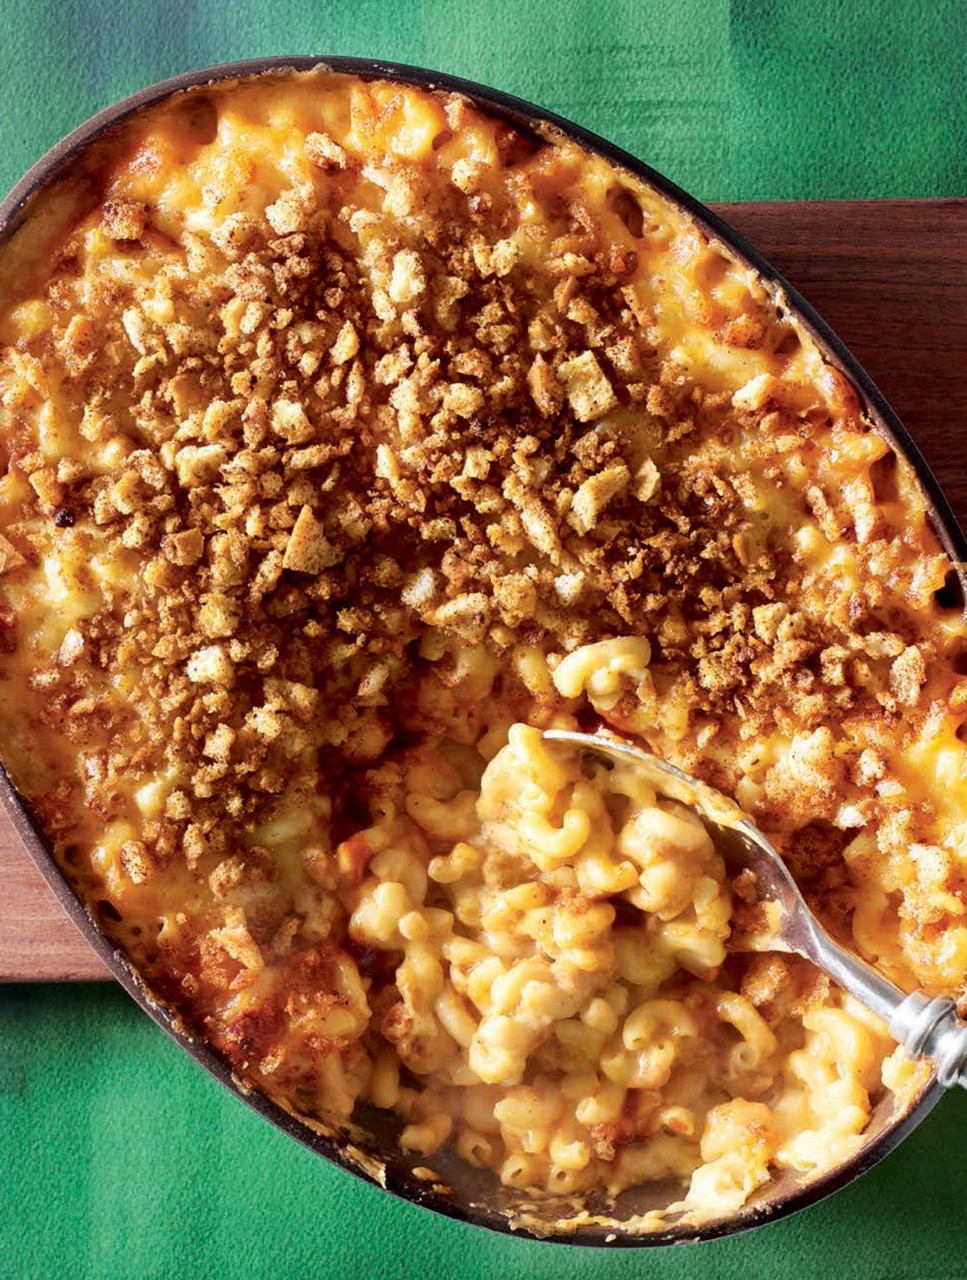 BBQ Mac ’n’ Cheese with Texas Chili Crumbs